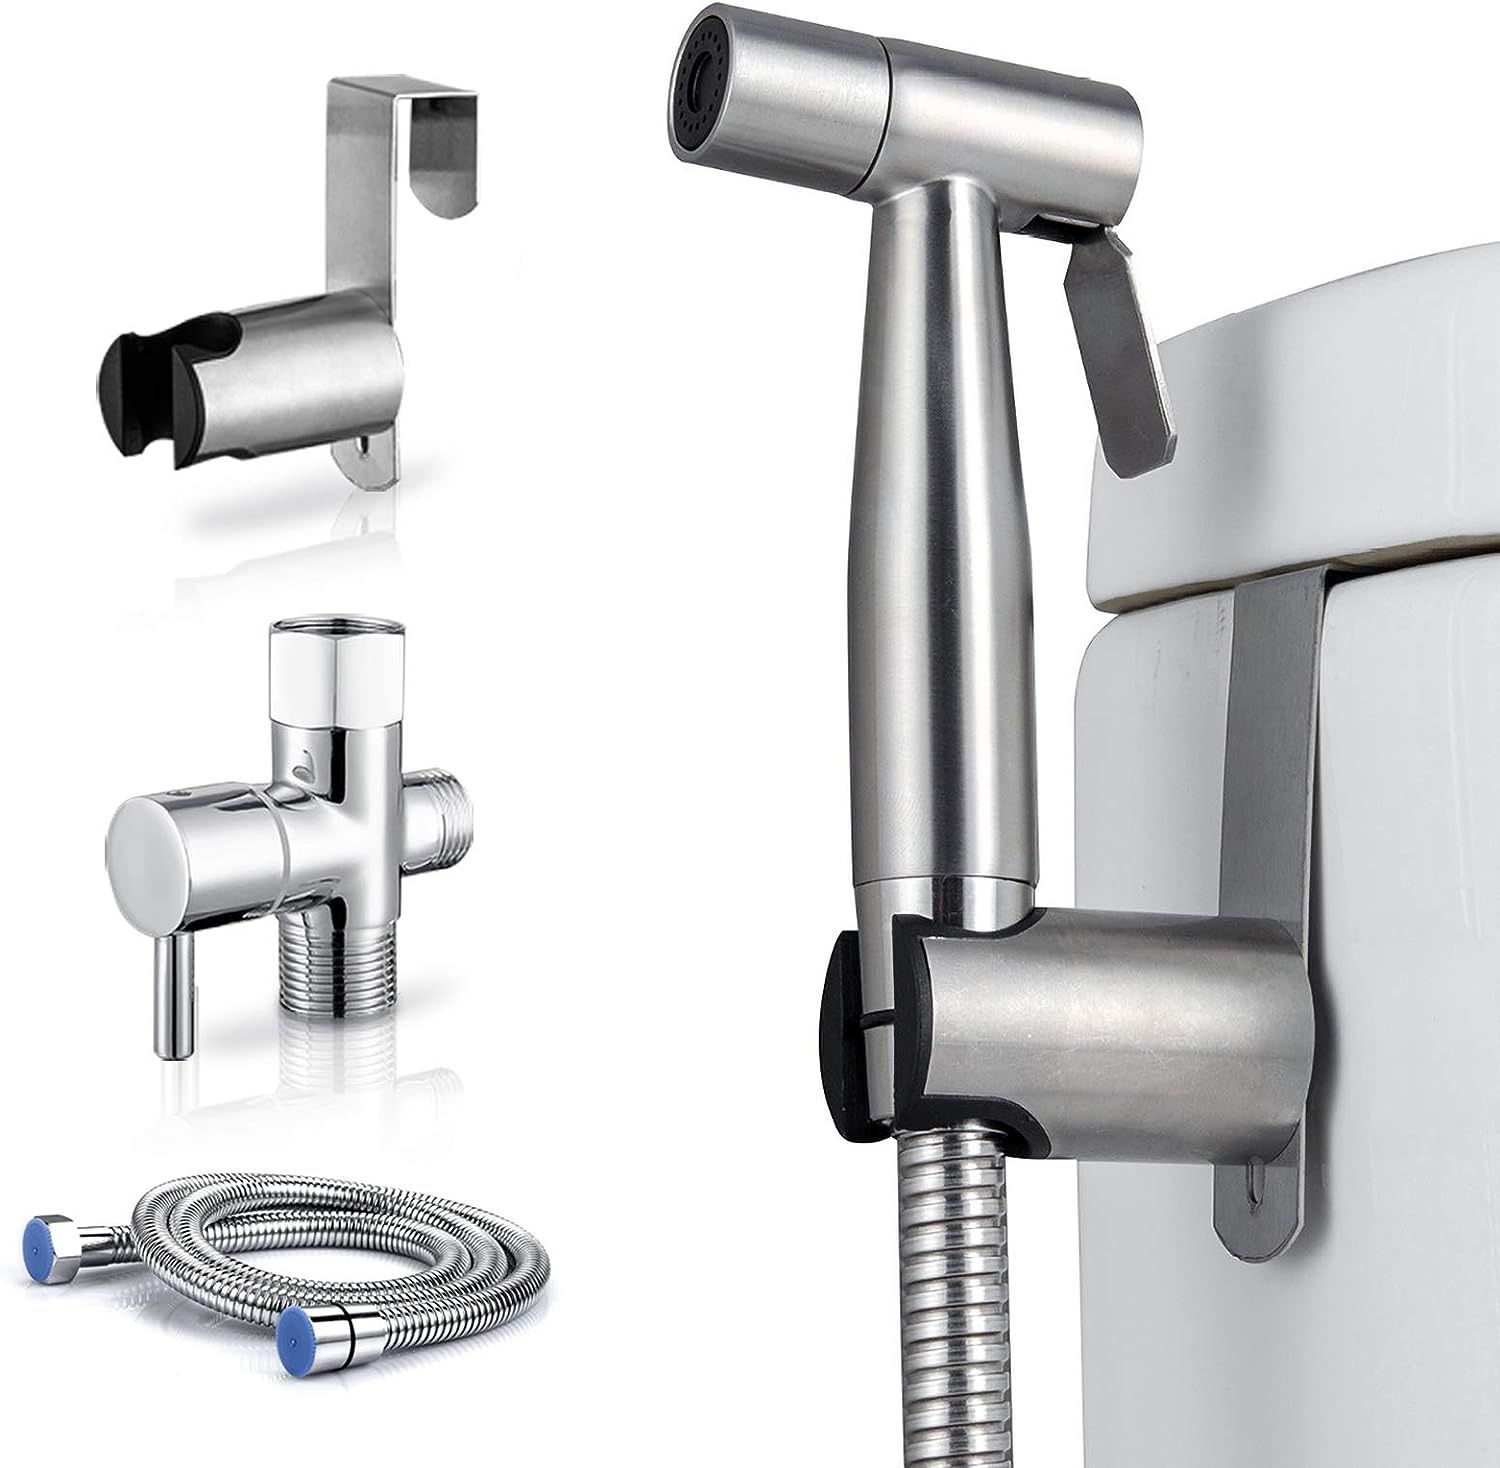 Arofa Handheld Toilet Bidet Sprayer for Toilet-Adjustable Water Pressure Control with Bidet Hose